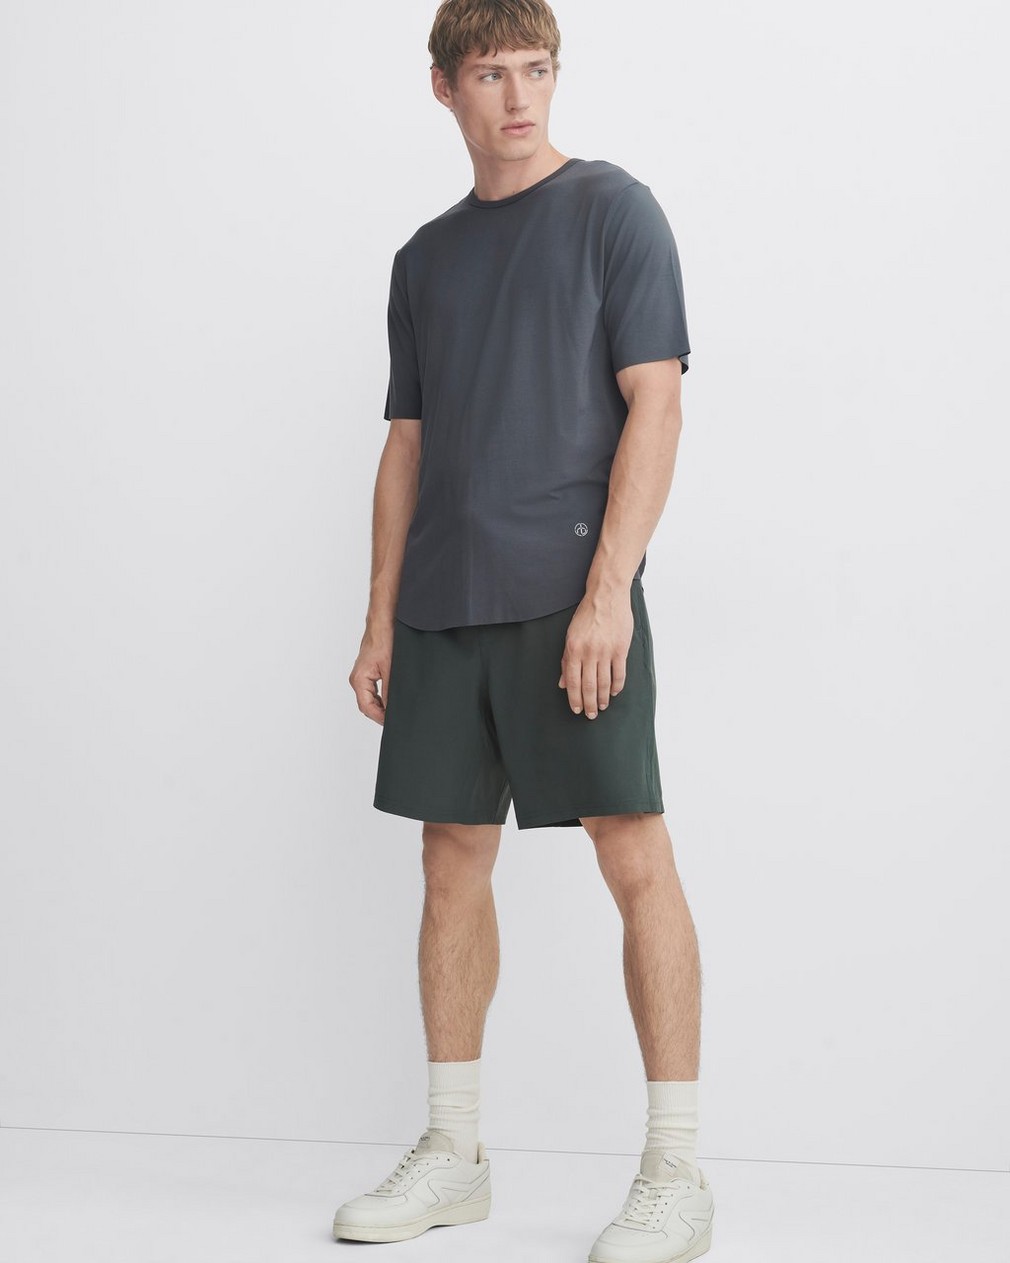 Shop Shorts for Men in Various Styles | rag & bone